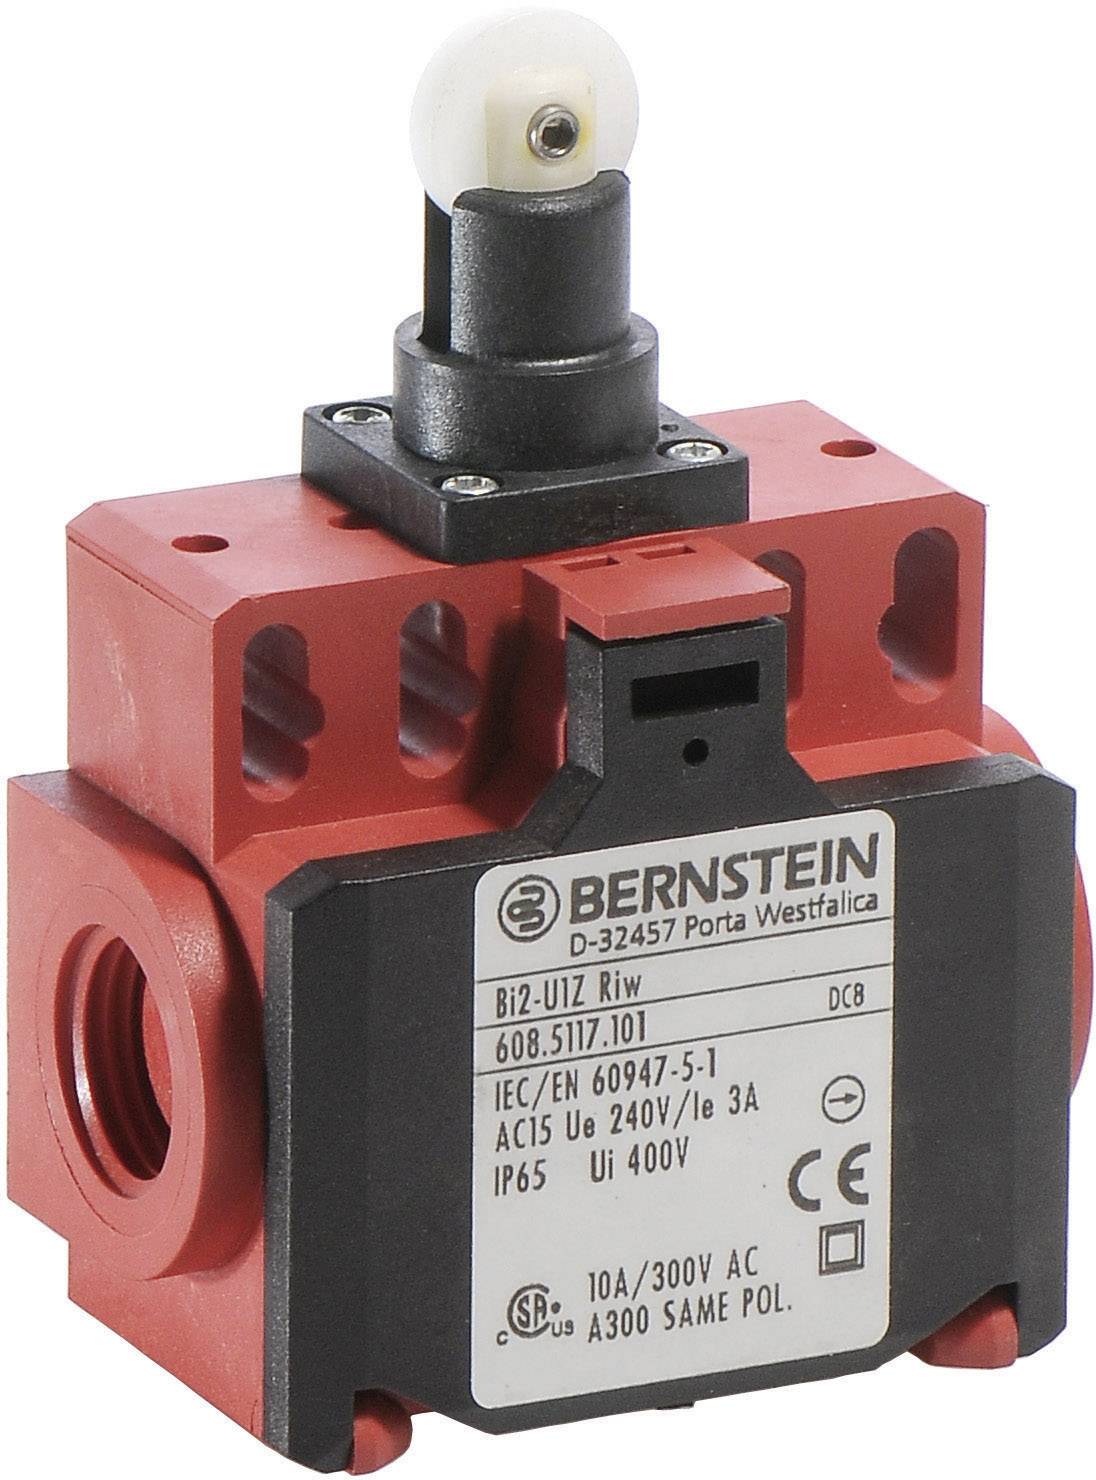 BERNSTEIN AG Endschalter 240 V/AC 10 A Rollenhebel tastend BI2-U1Z RIW IP65 1 St. (6085117101)